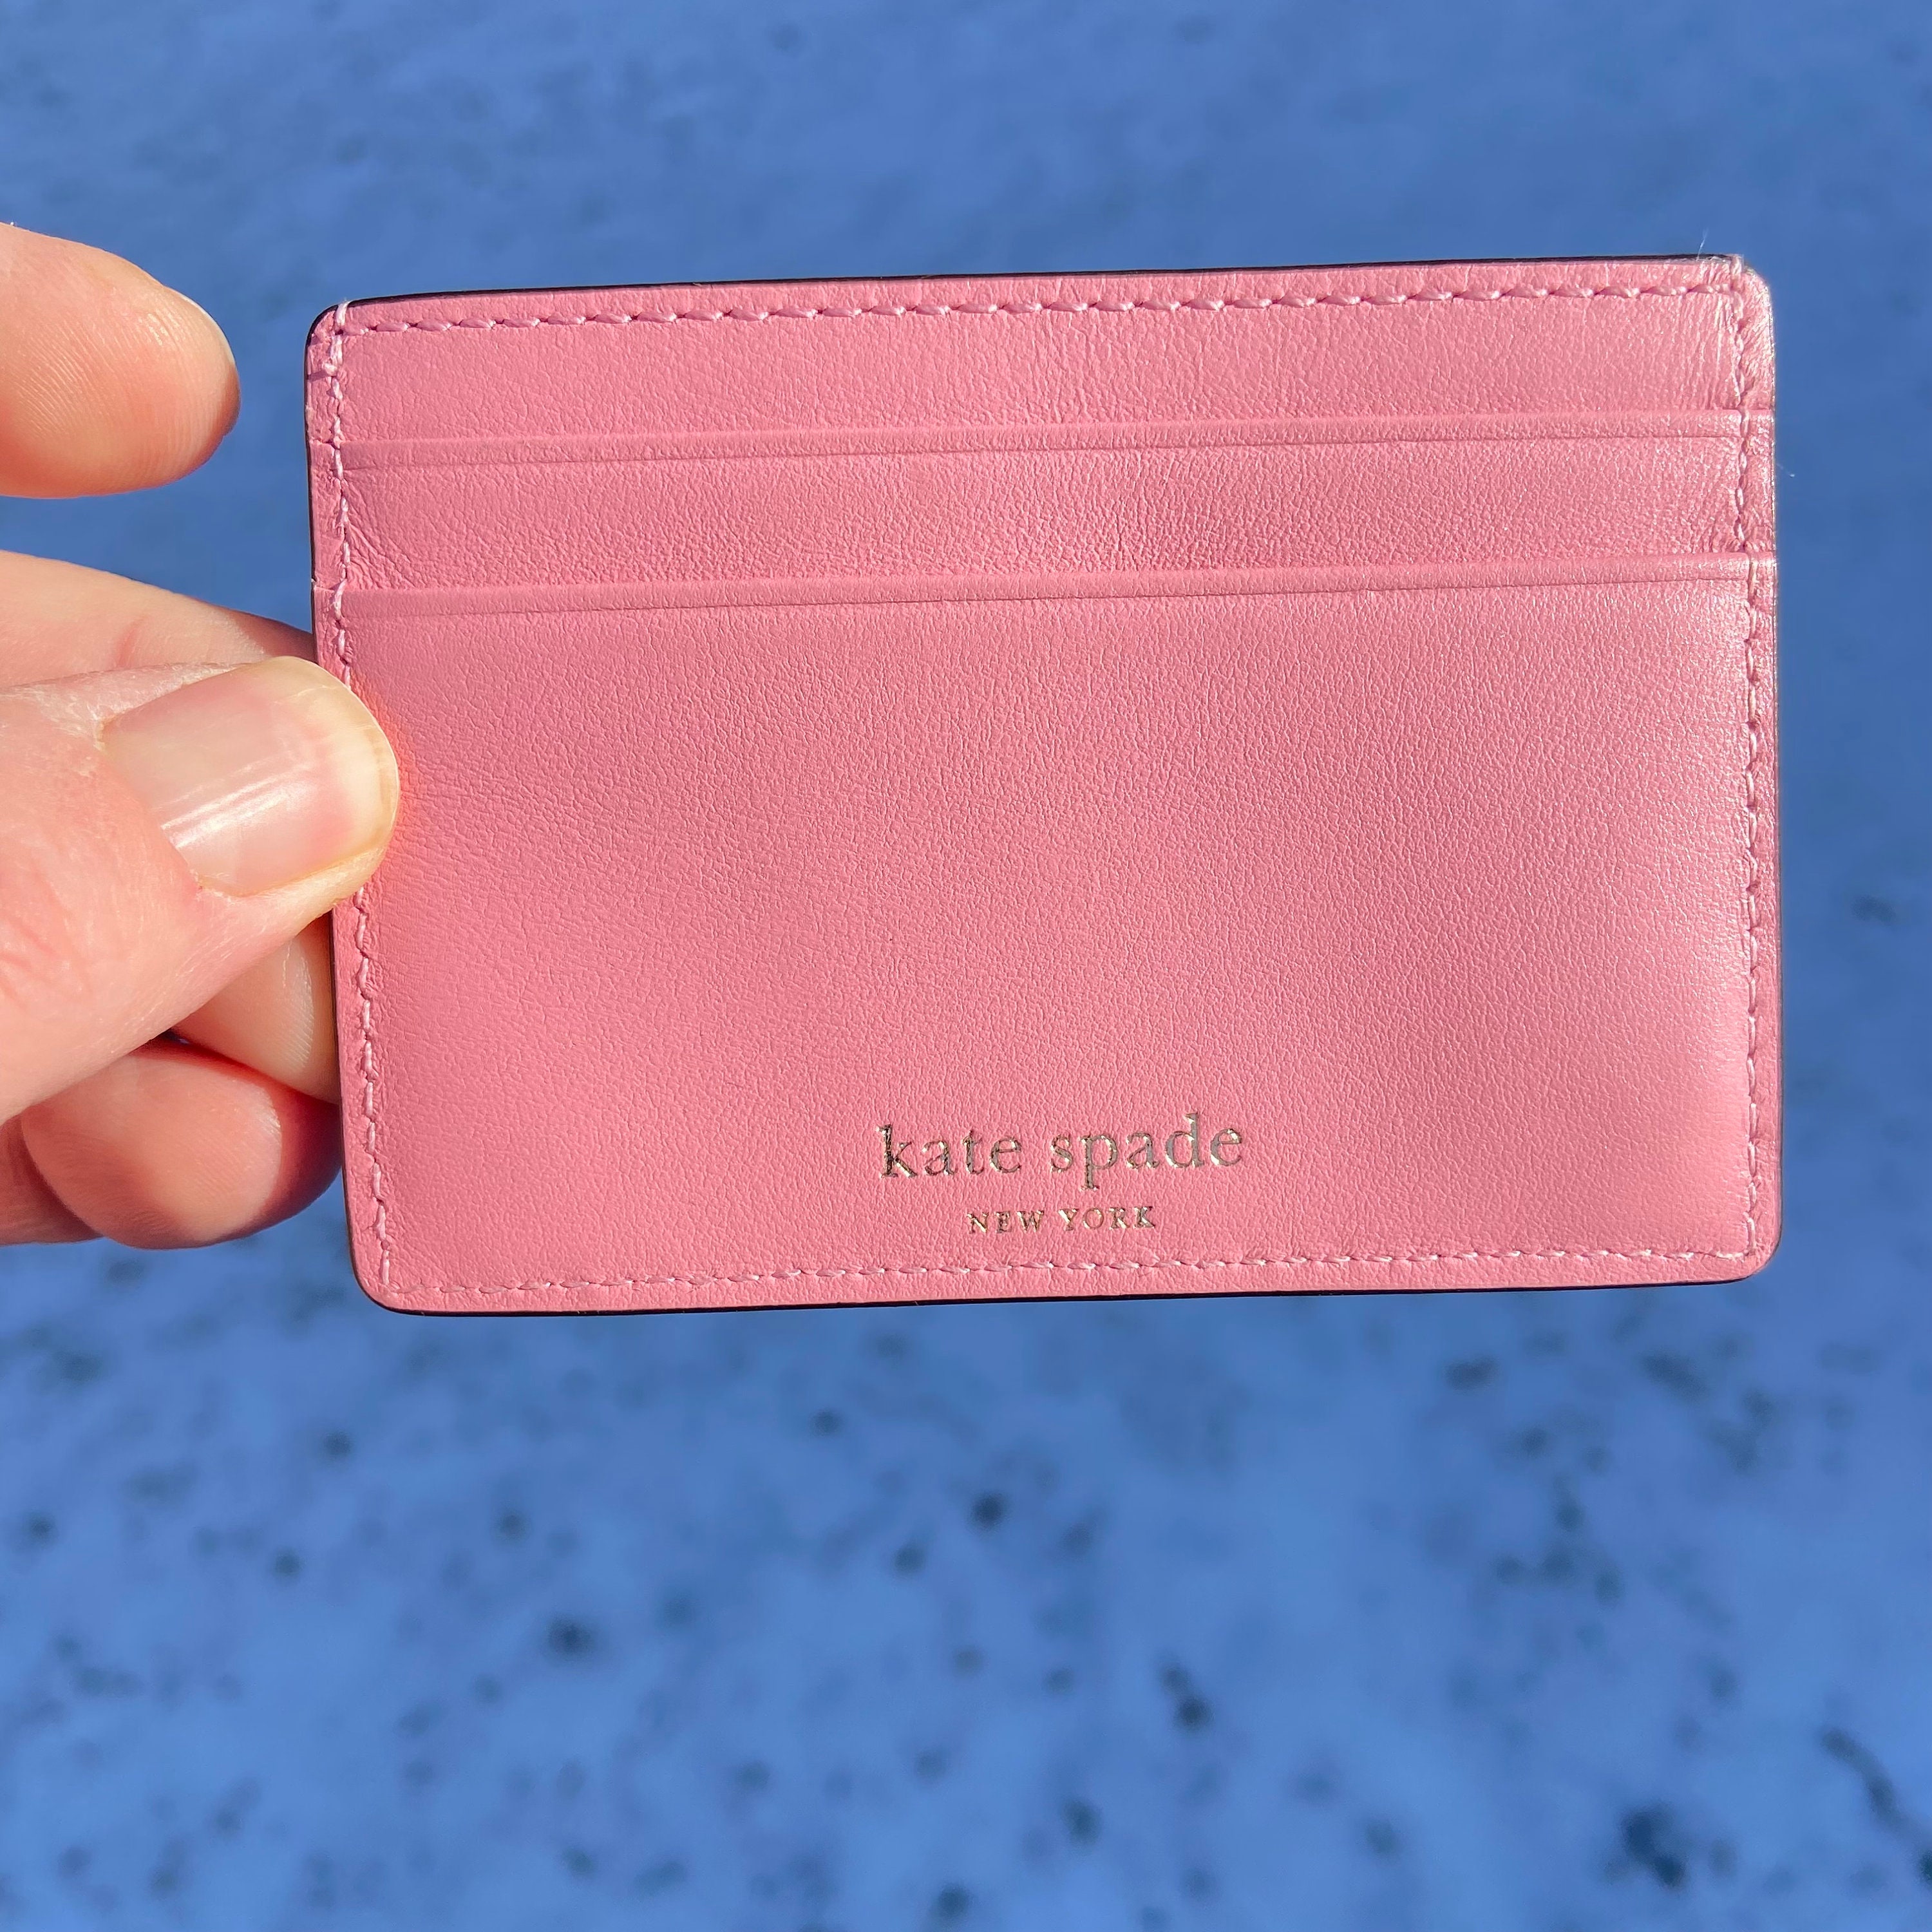 Kate Spade Card Holder - Etsy